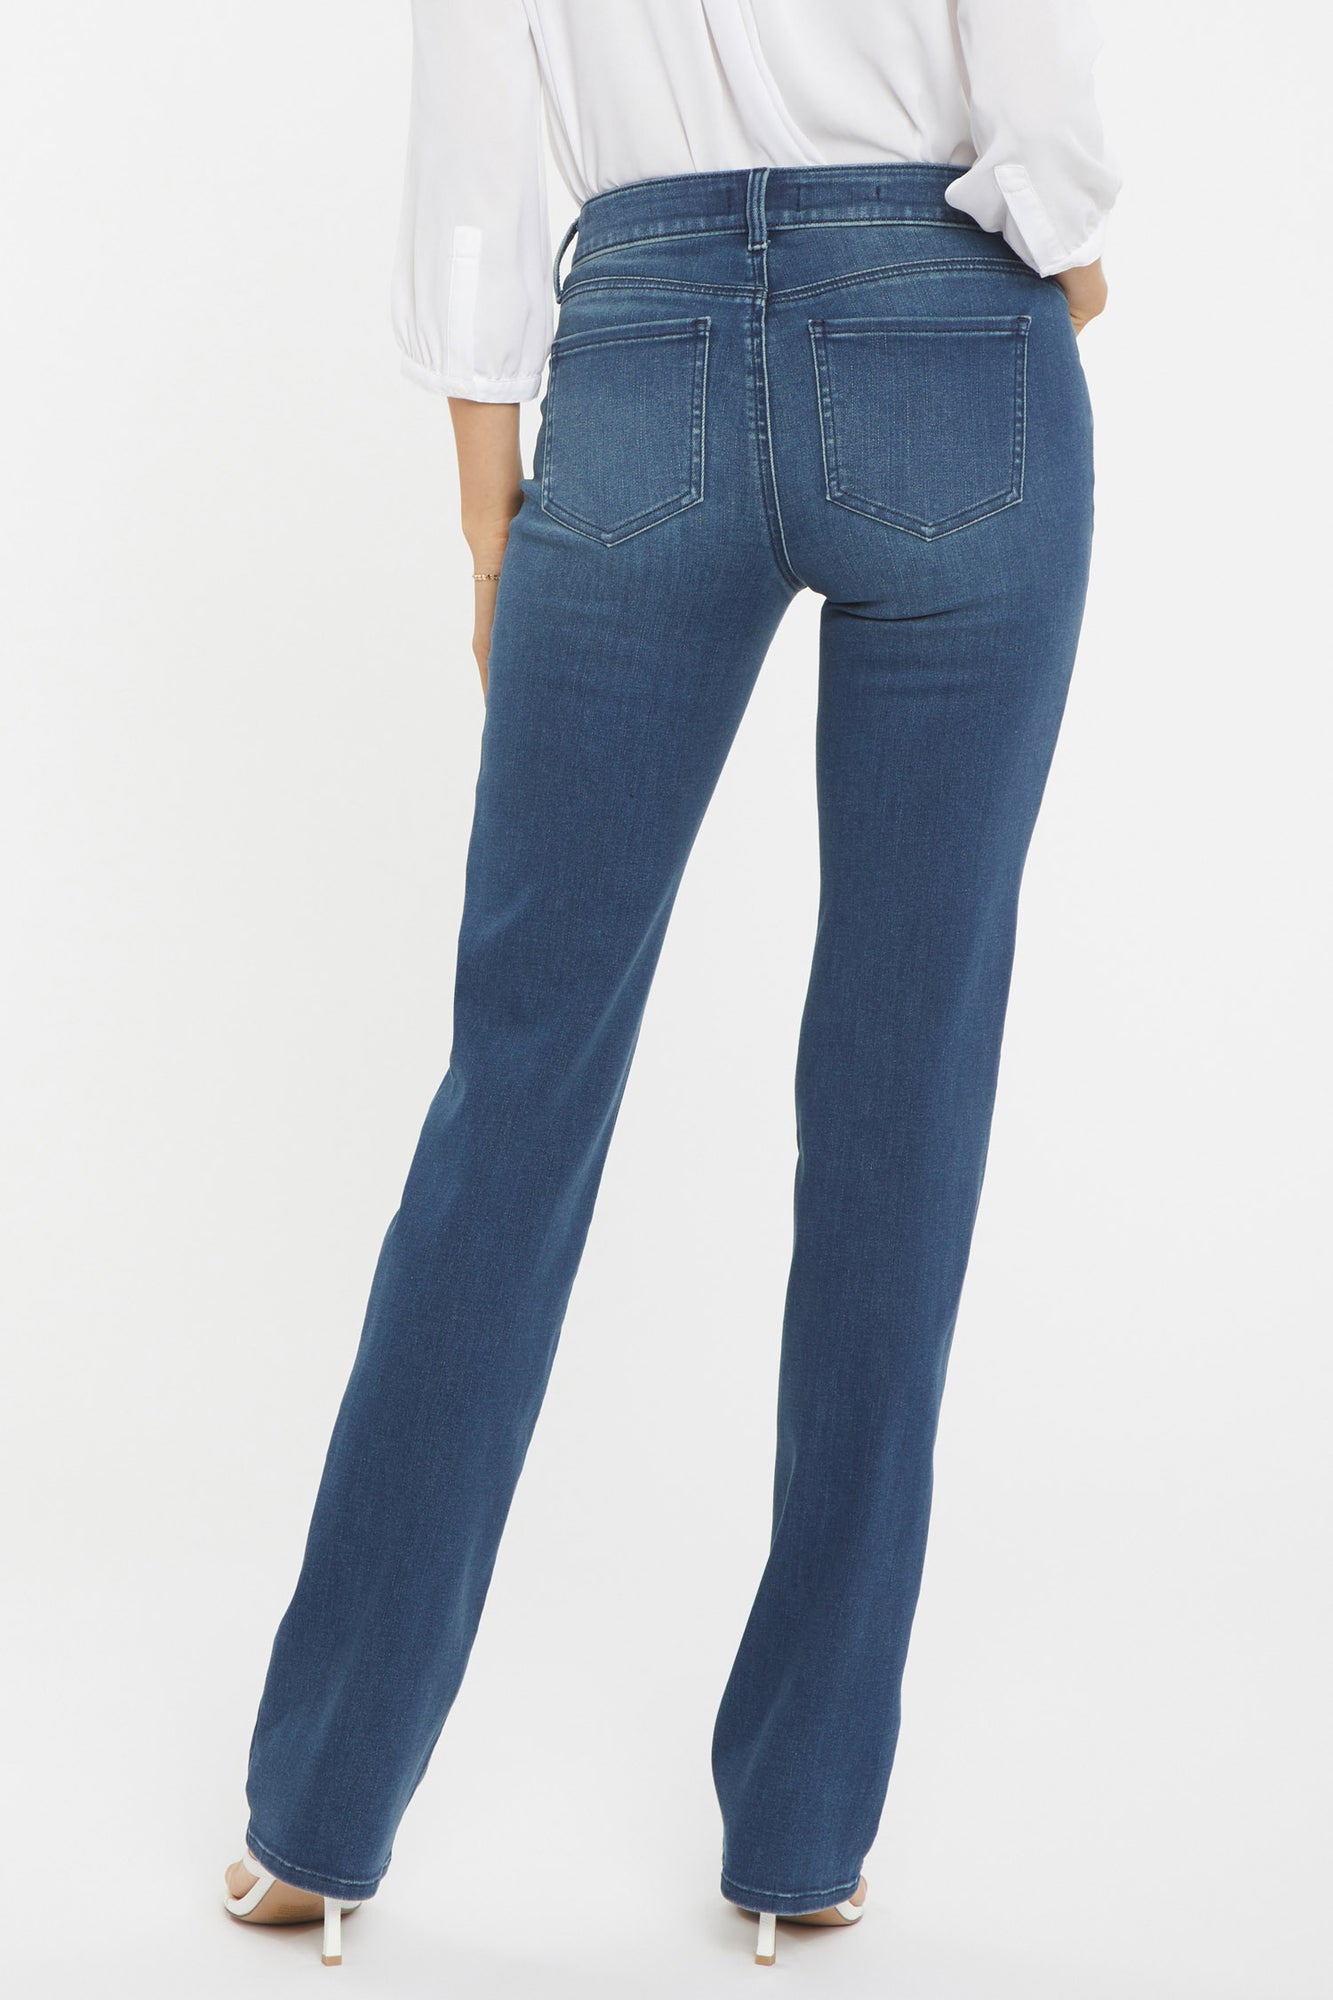 NYDJ Marilyn Straight Jeans  - Saybrook